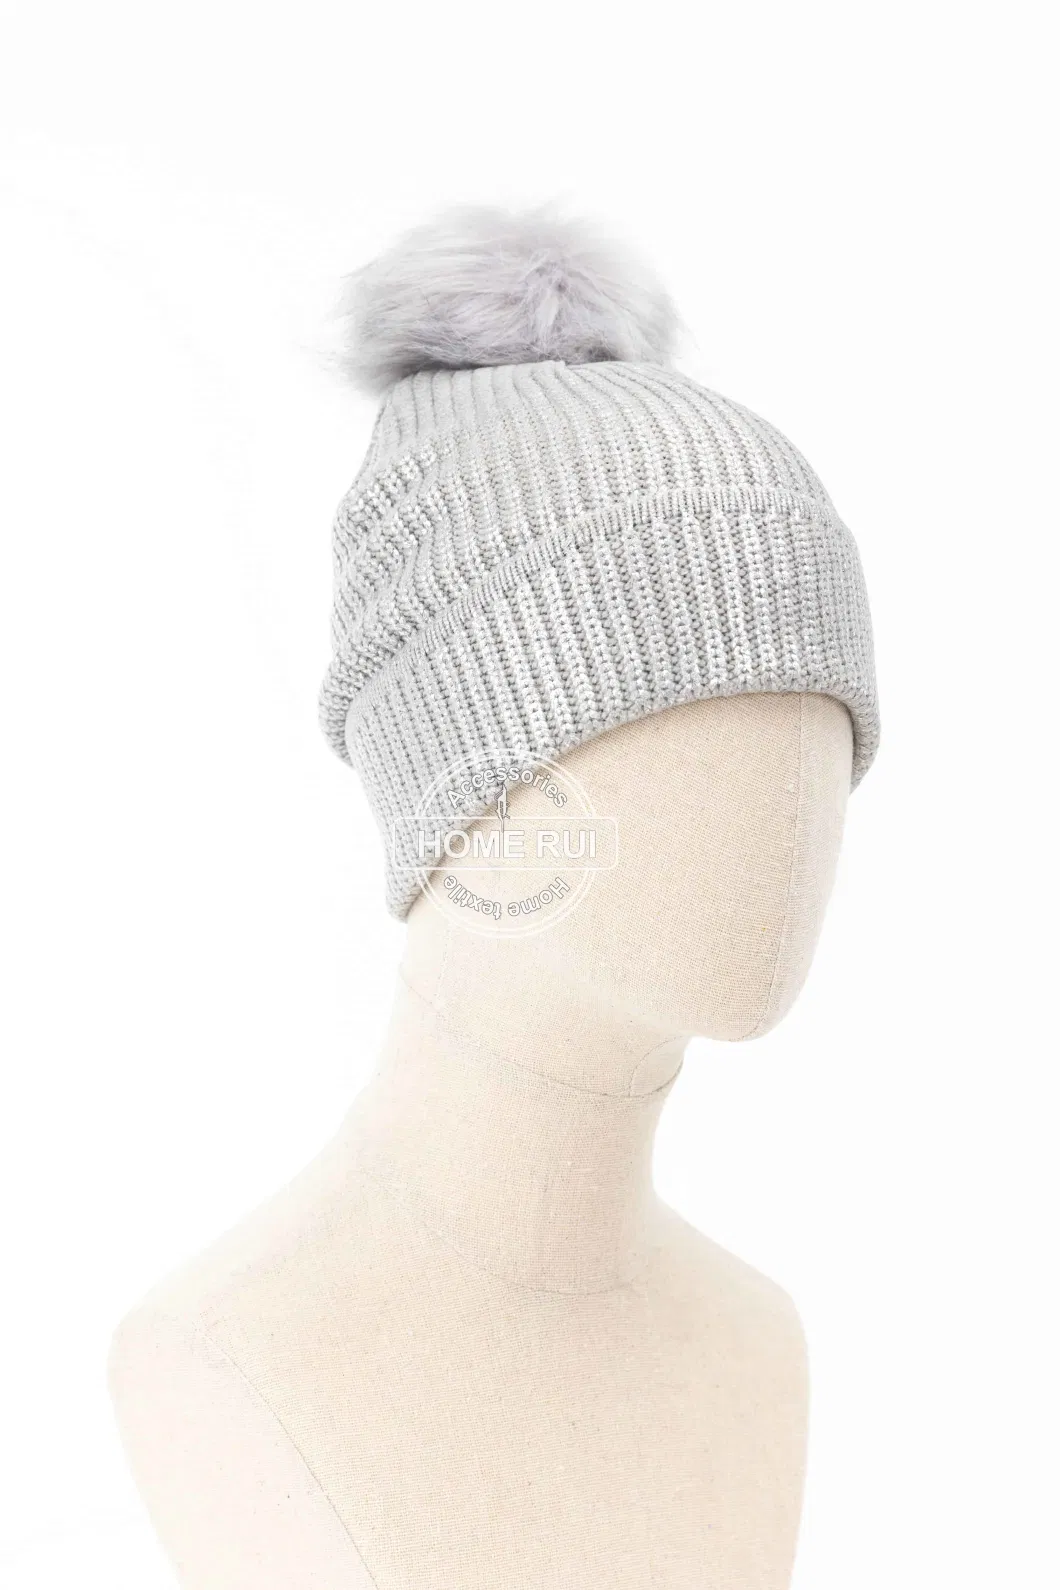 Unisex Warm Soft Slouchy Acrylic Fold Edge Silver Grey Fur Pompom Oil Print Knitted Rib Bonnet Casual Beanie Hat